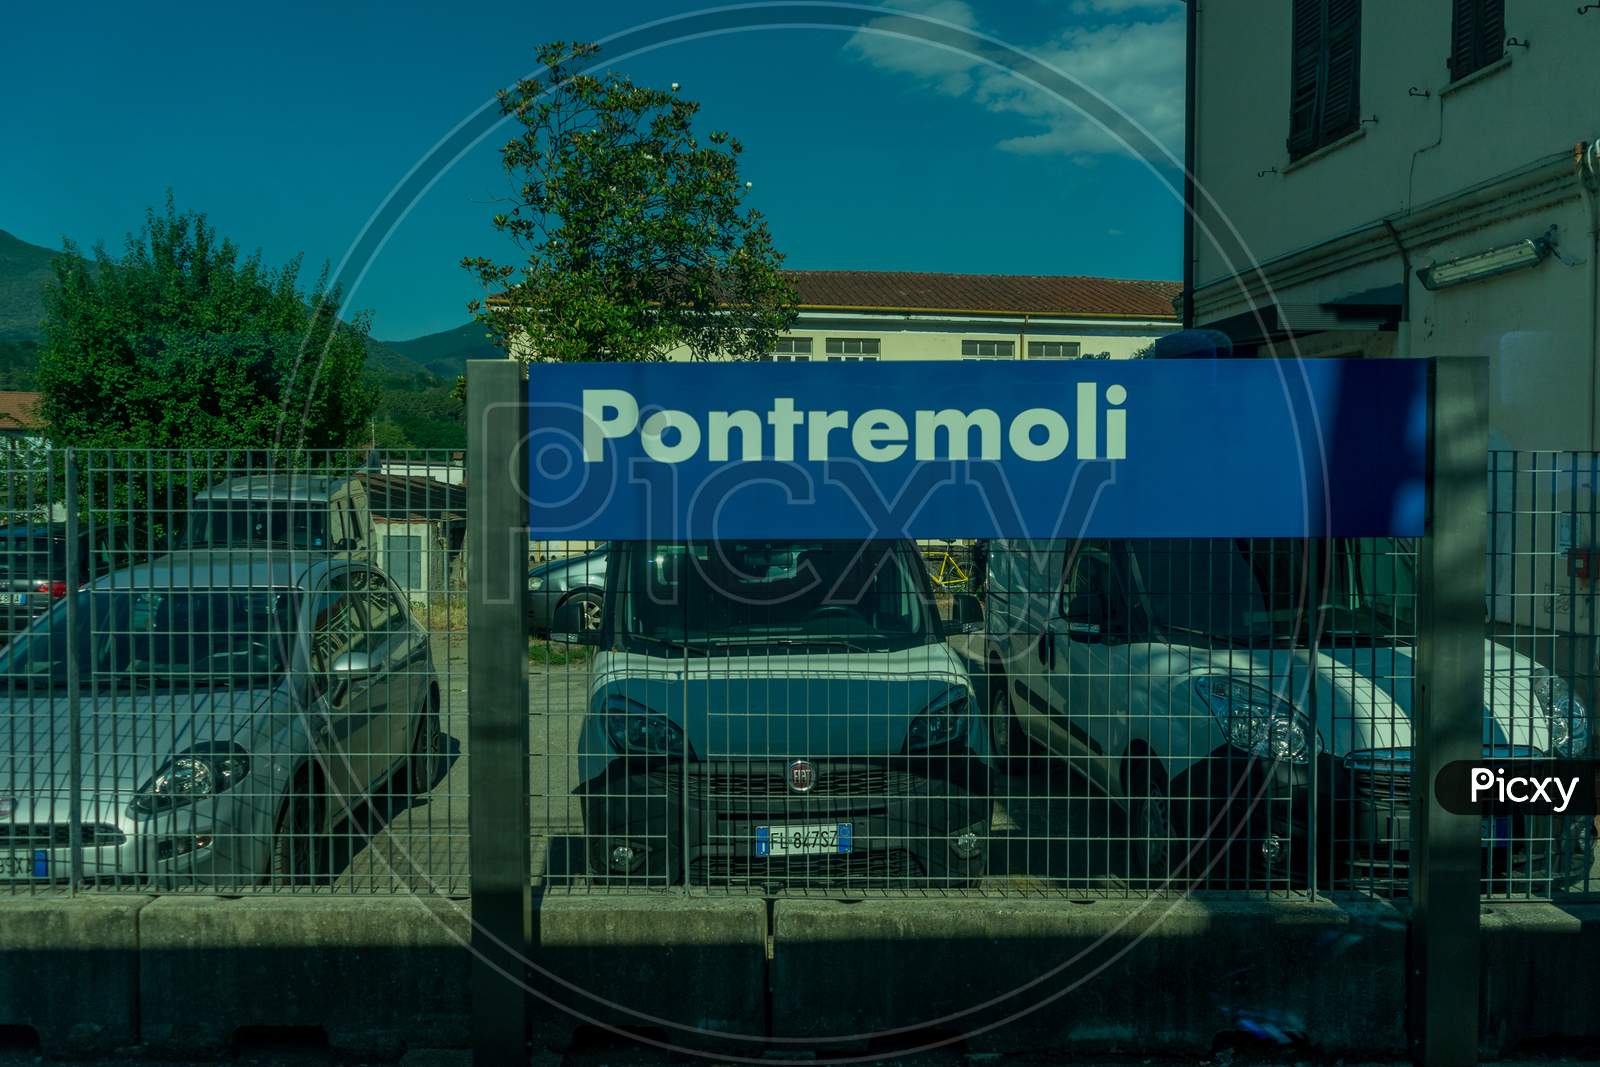 Pontremoli, Italy - 28 June 2018: The Pontremoli Railway Station, Italy